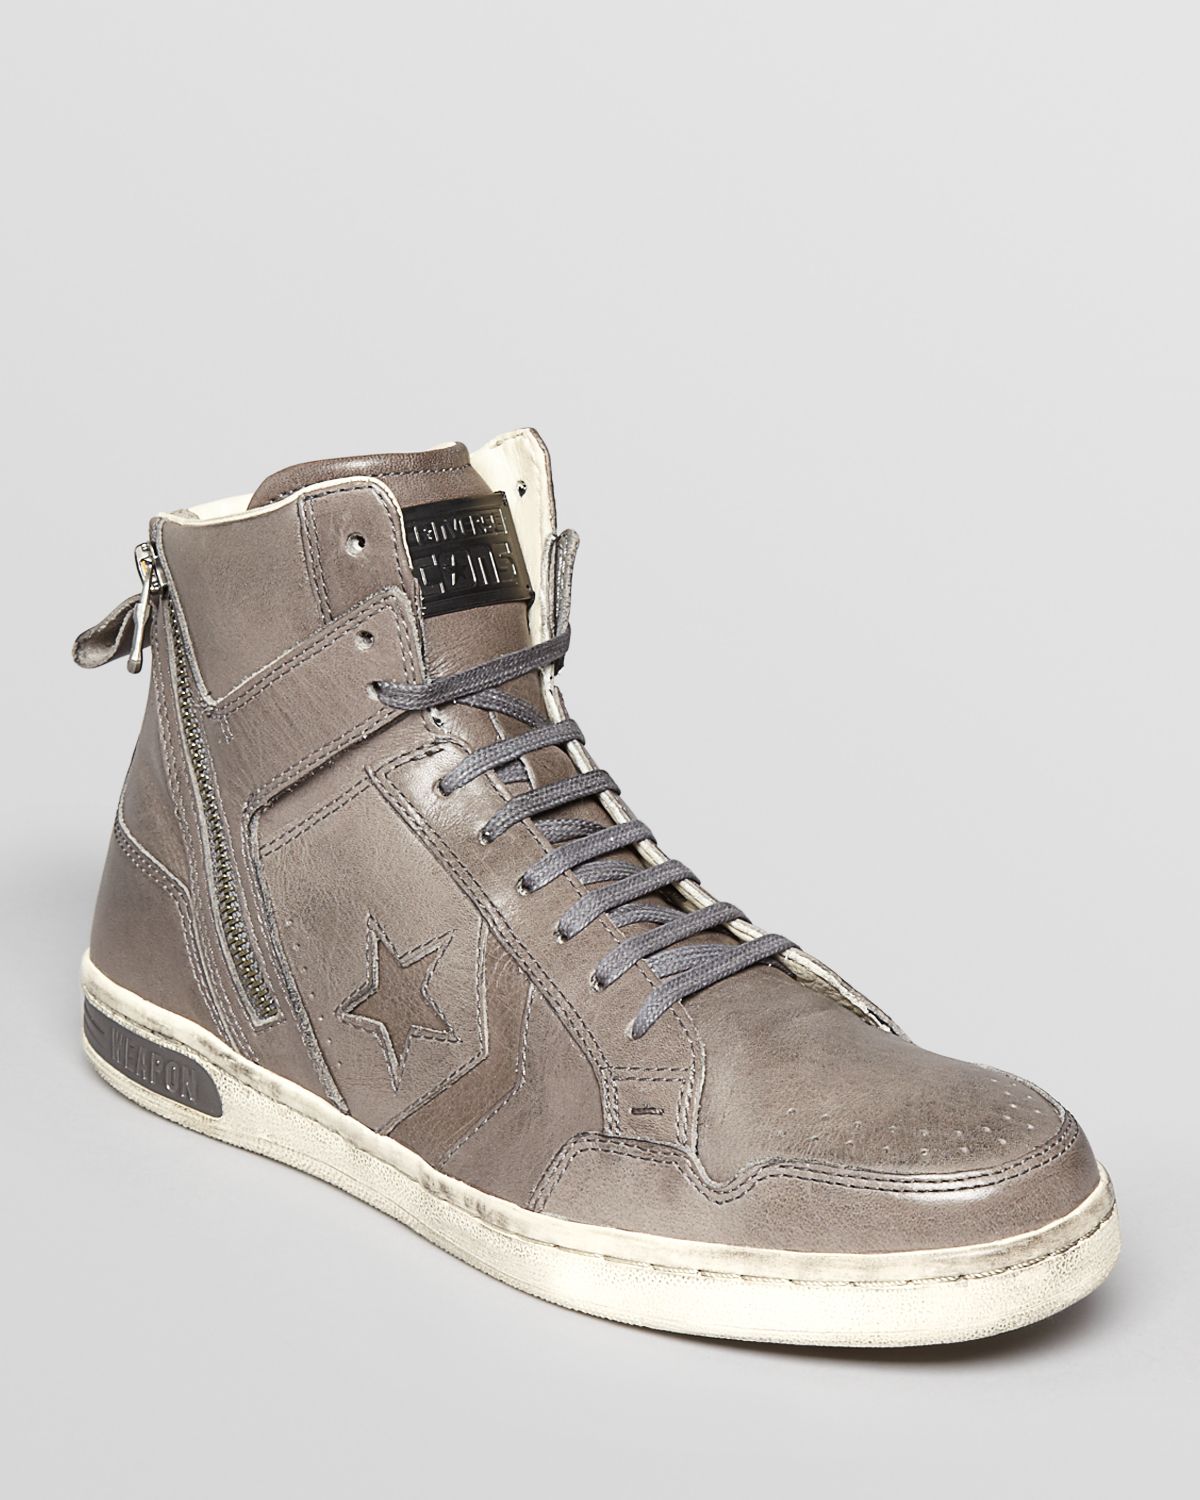 Converse By John Varvatos Weapon Zip High Top Sneakers in Grey (Gray) for  Men - Lyst